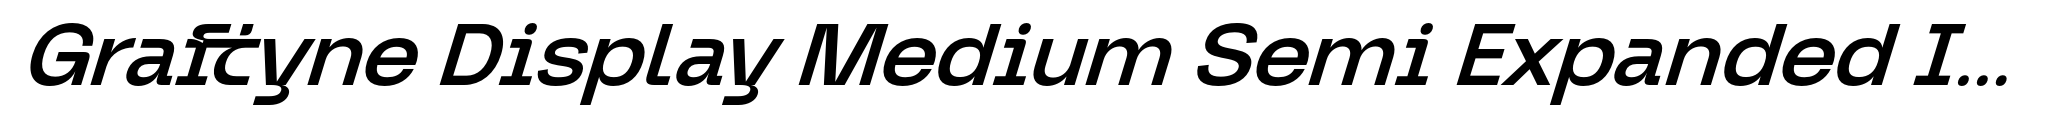 Graftyne Display Medium Semi Expanded Italic image